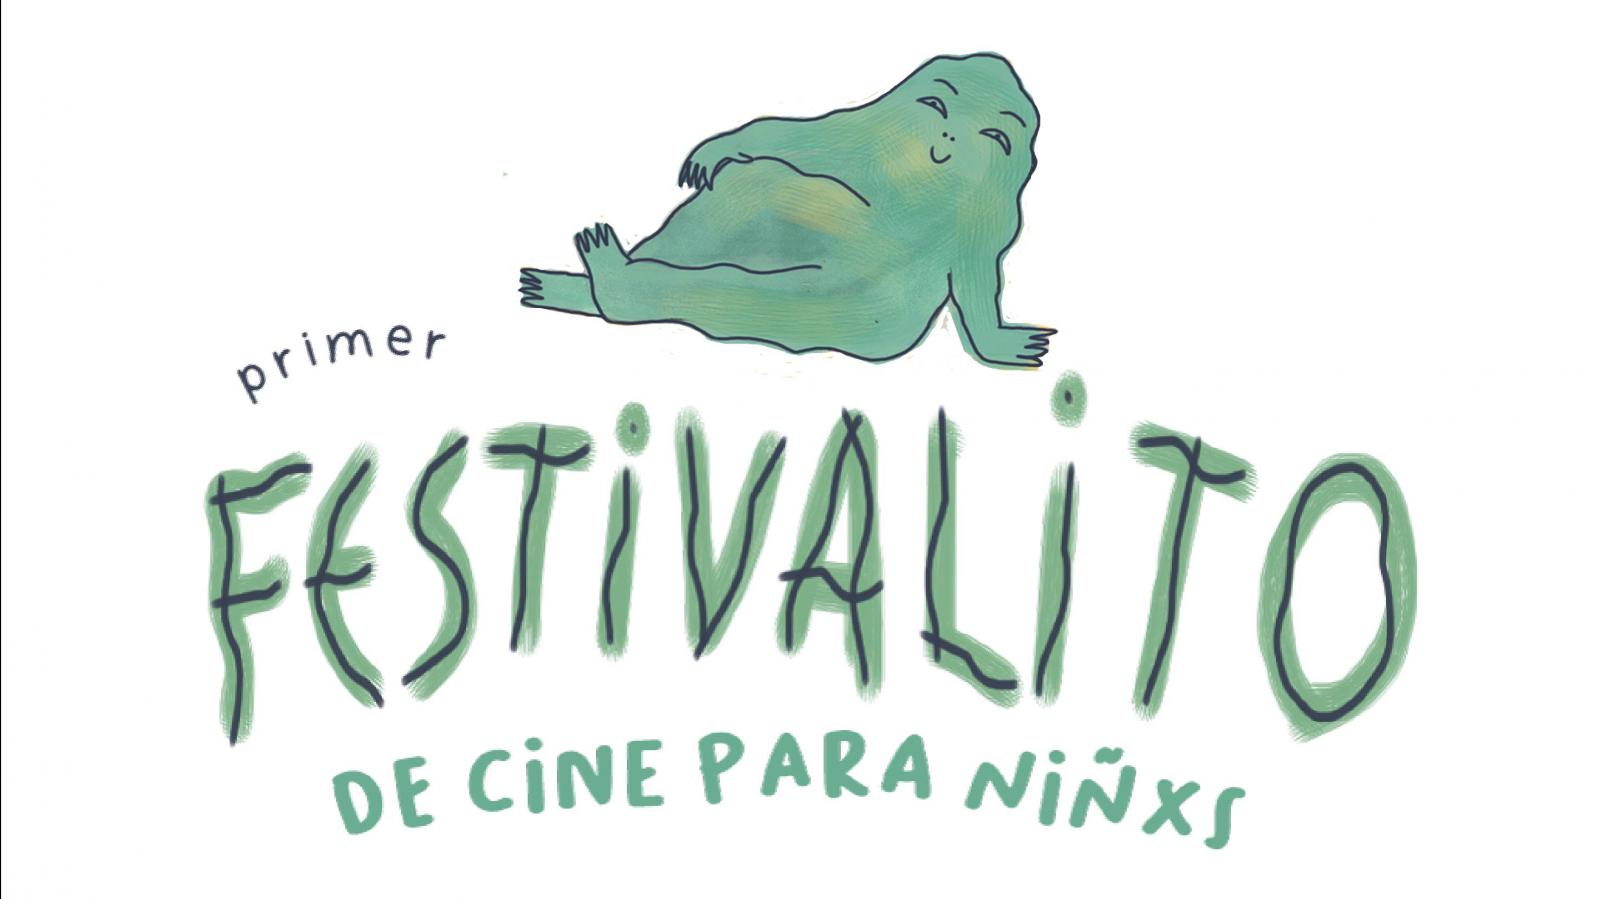 Festivalito de Cine para ni&ntilde;xs: Taller de la historia a la animaci&oacute;n